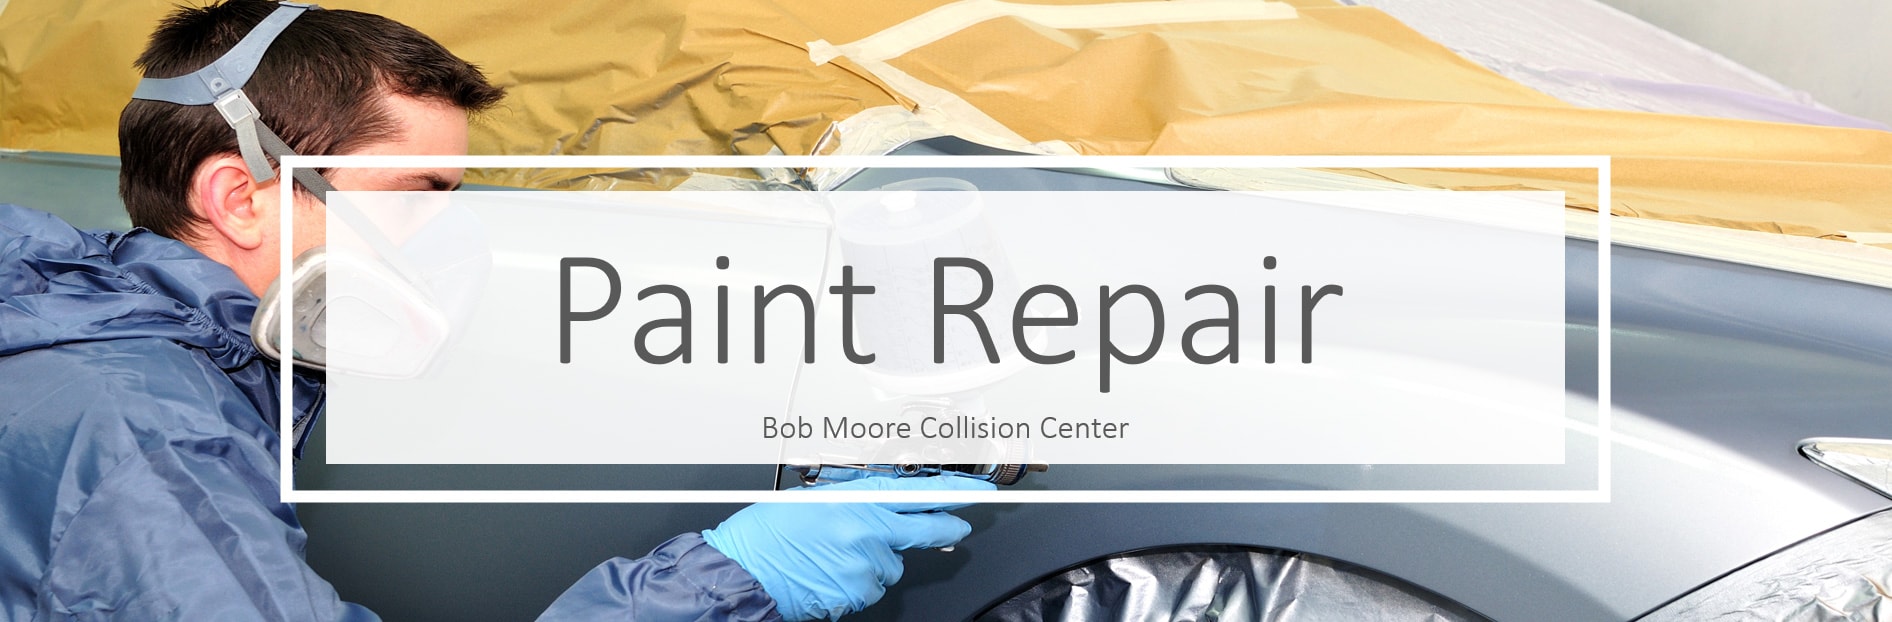 Paint Repair in Oklahoma City